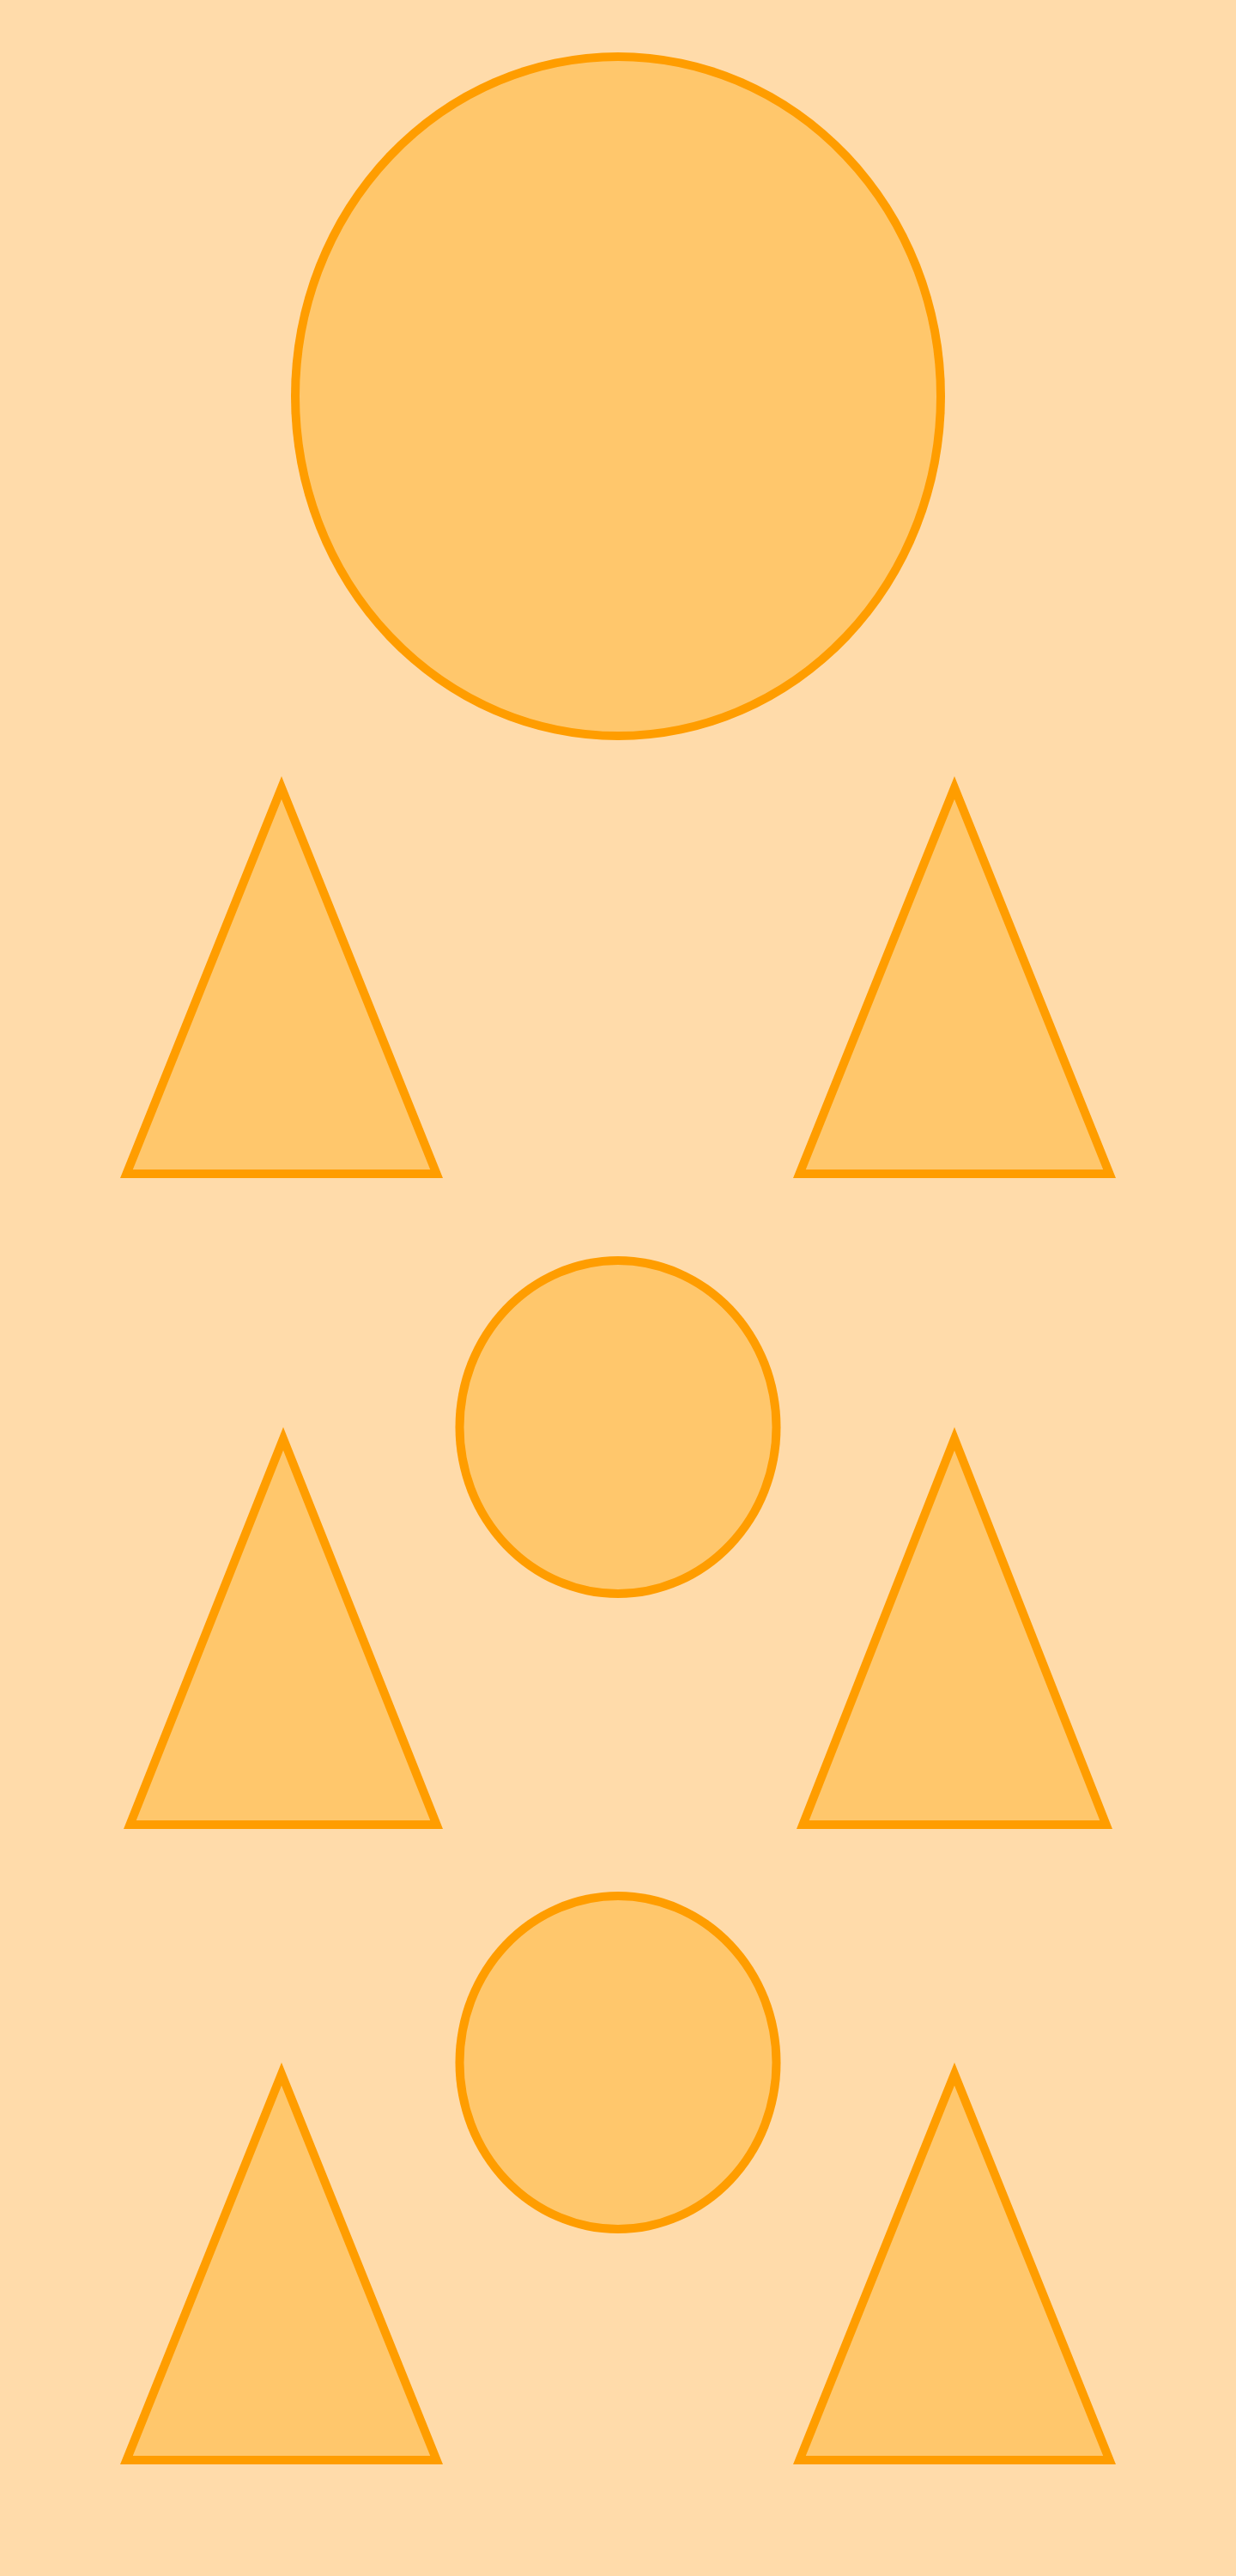 orange grid